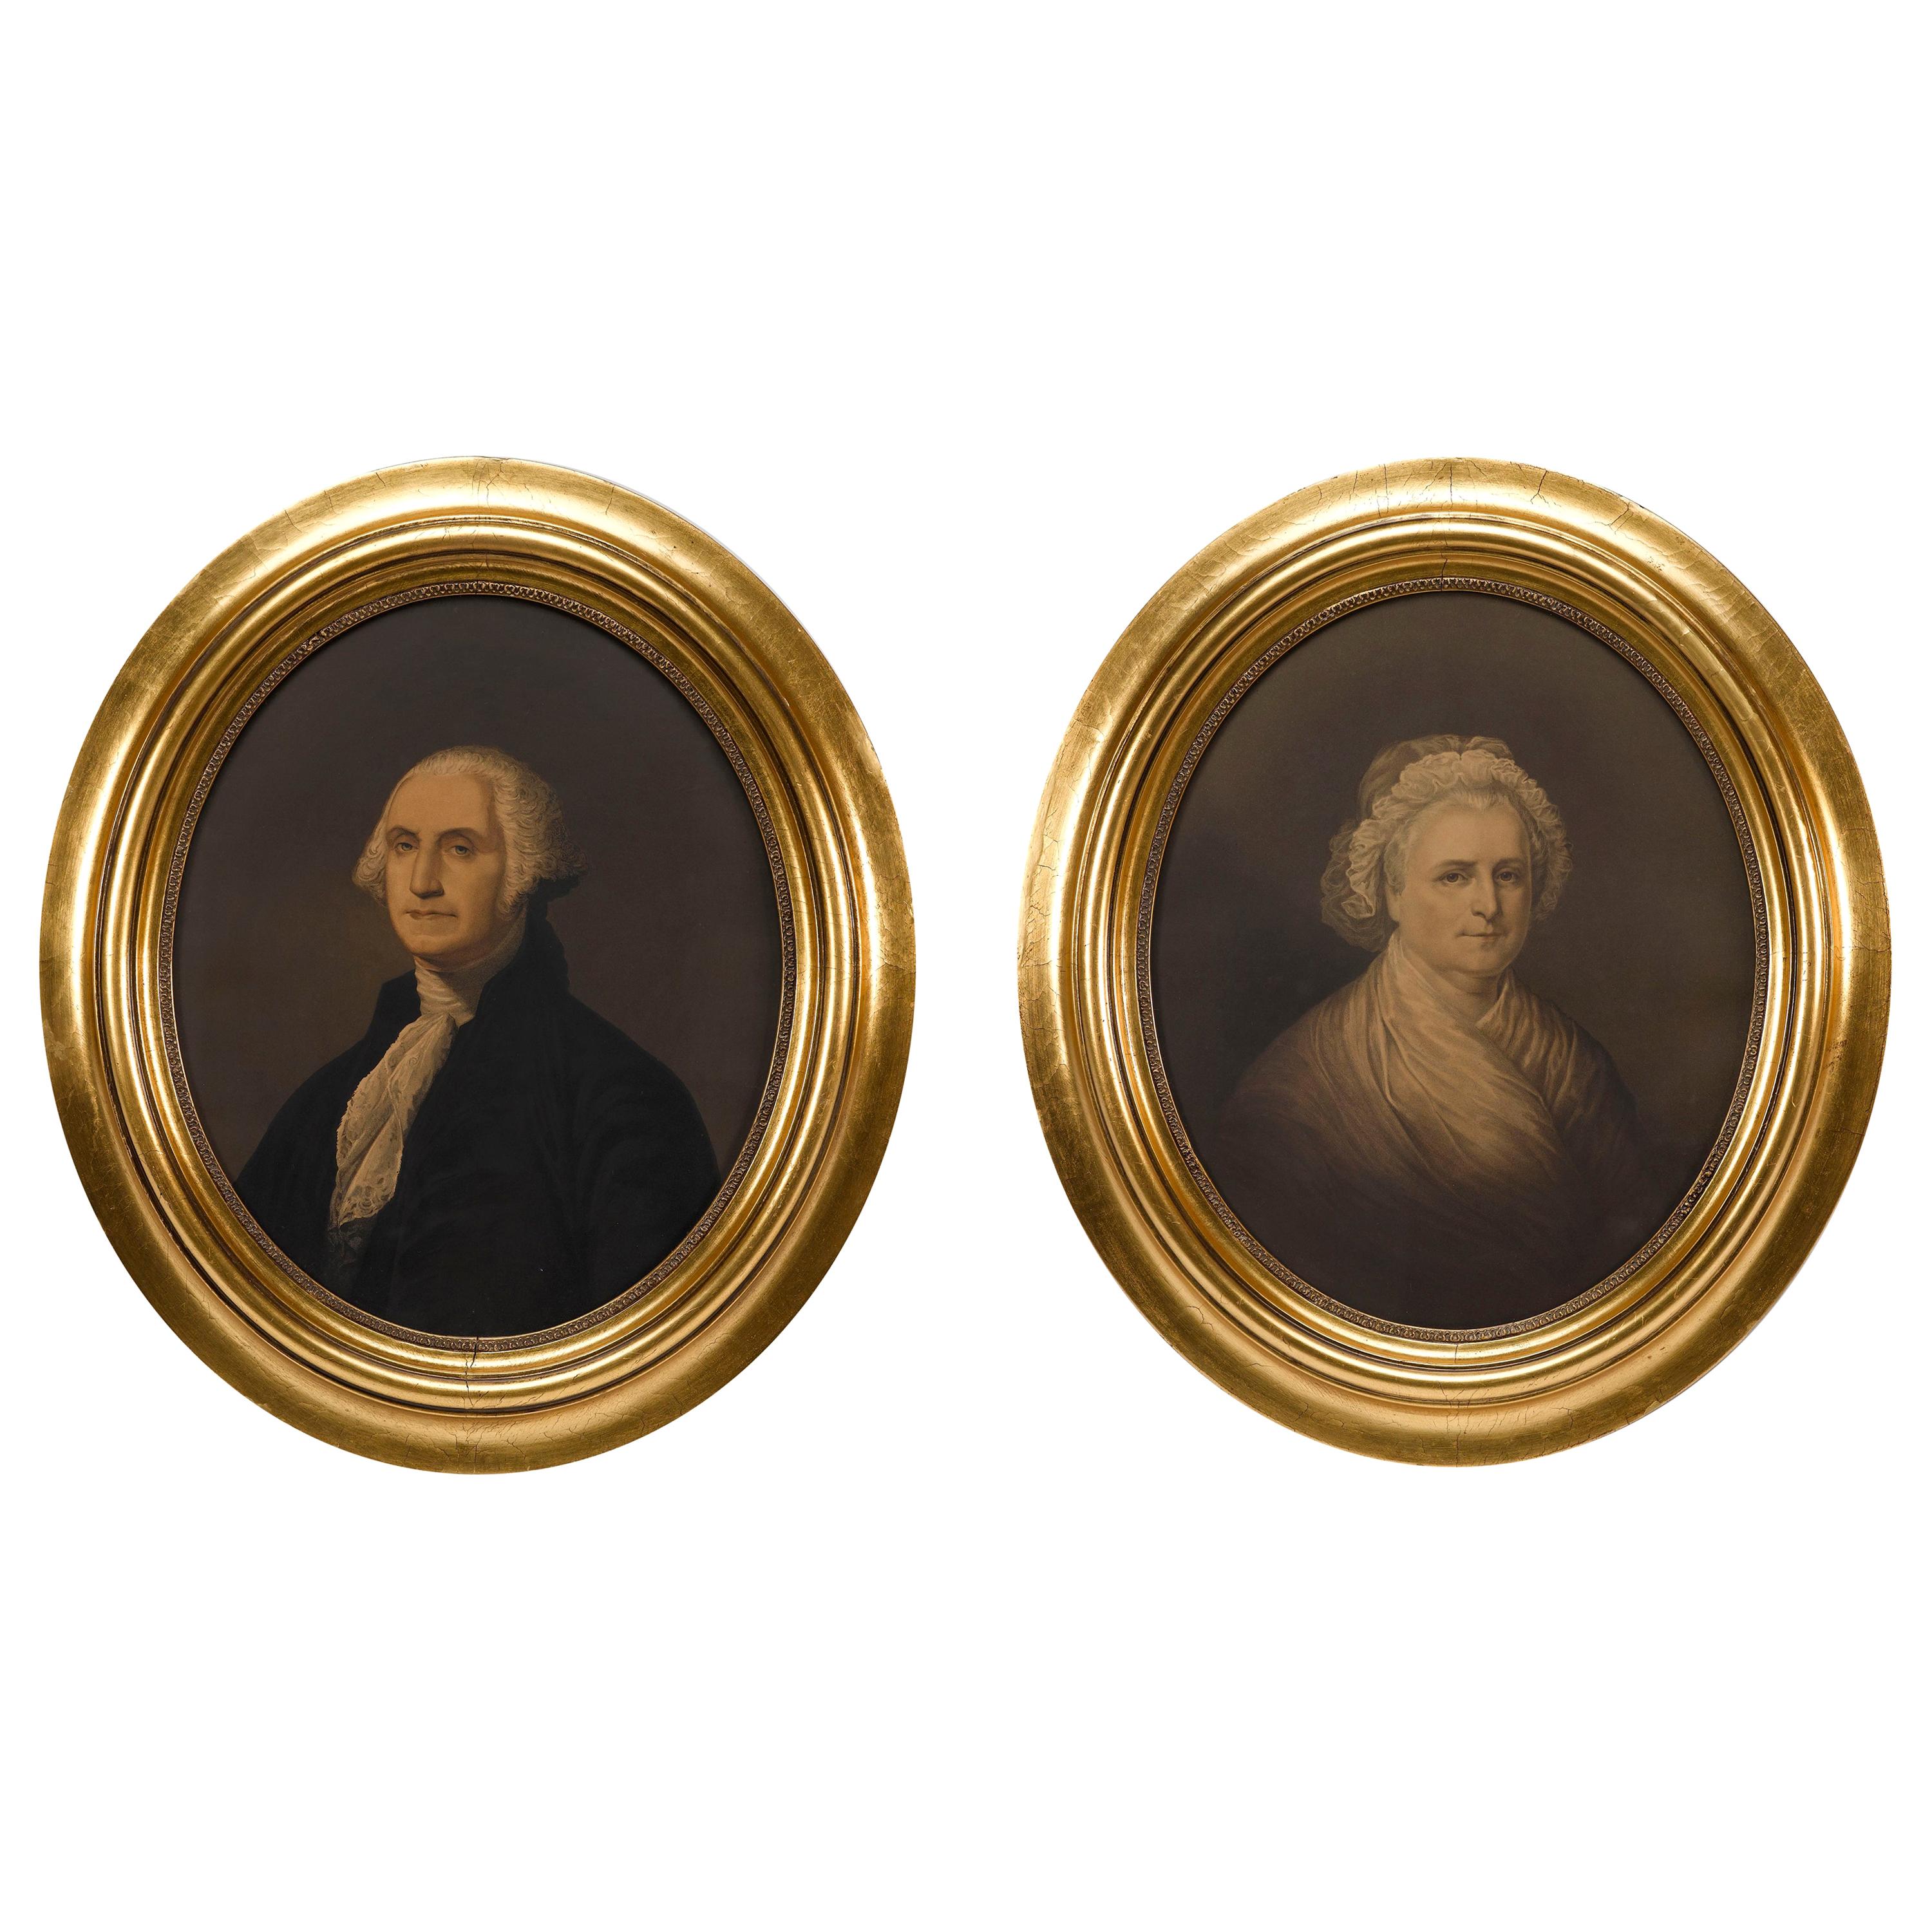 George Washington and Martha Washington Portraits by E.C. Middleton, 1861